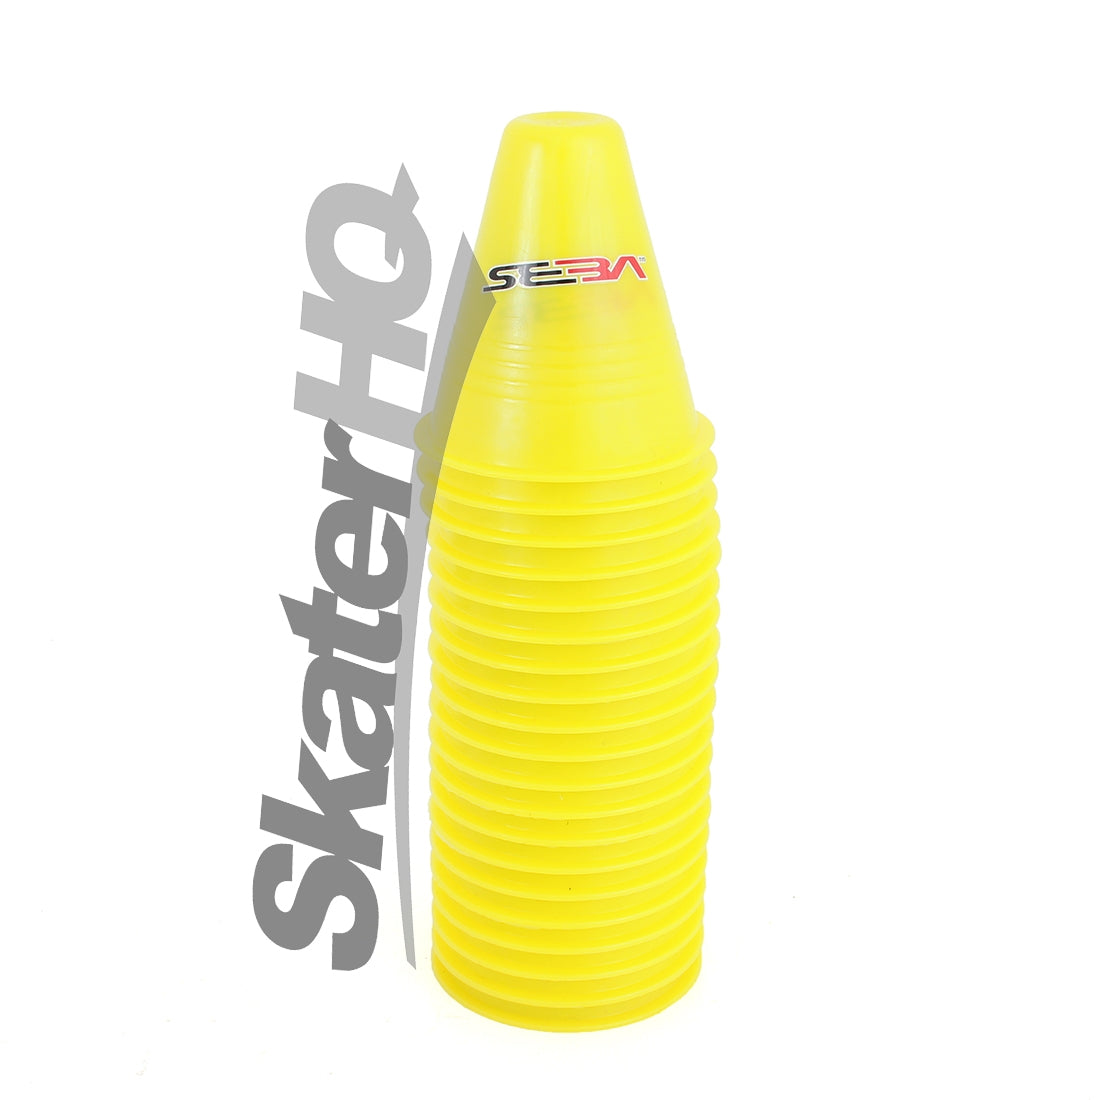 SEBA Slalom Cones 20pk - Yellow Inline Rec Accessories